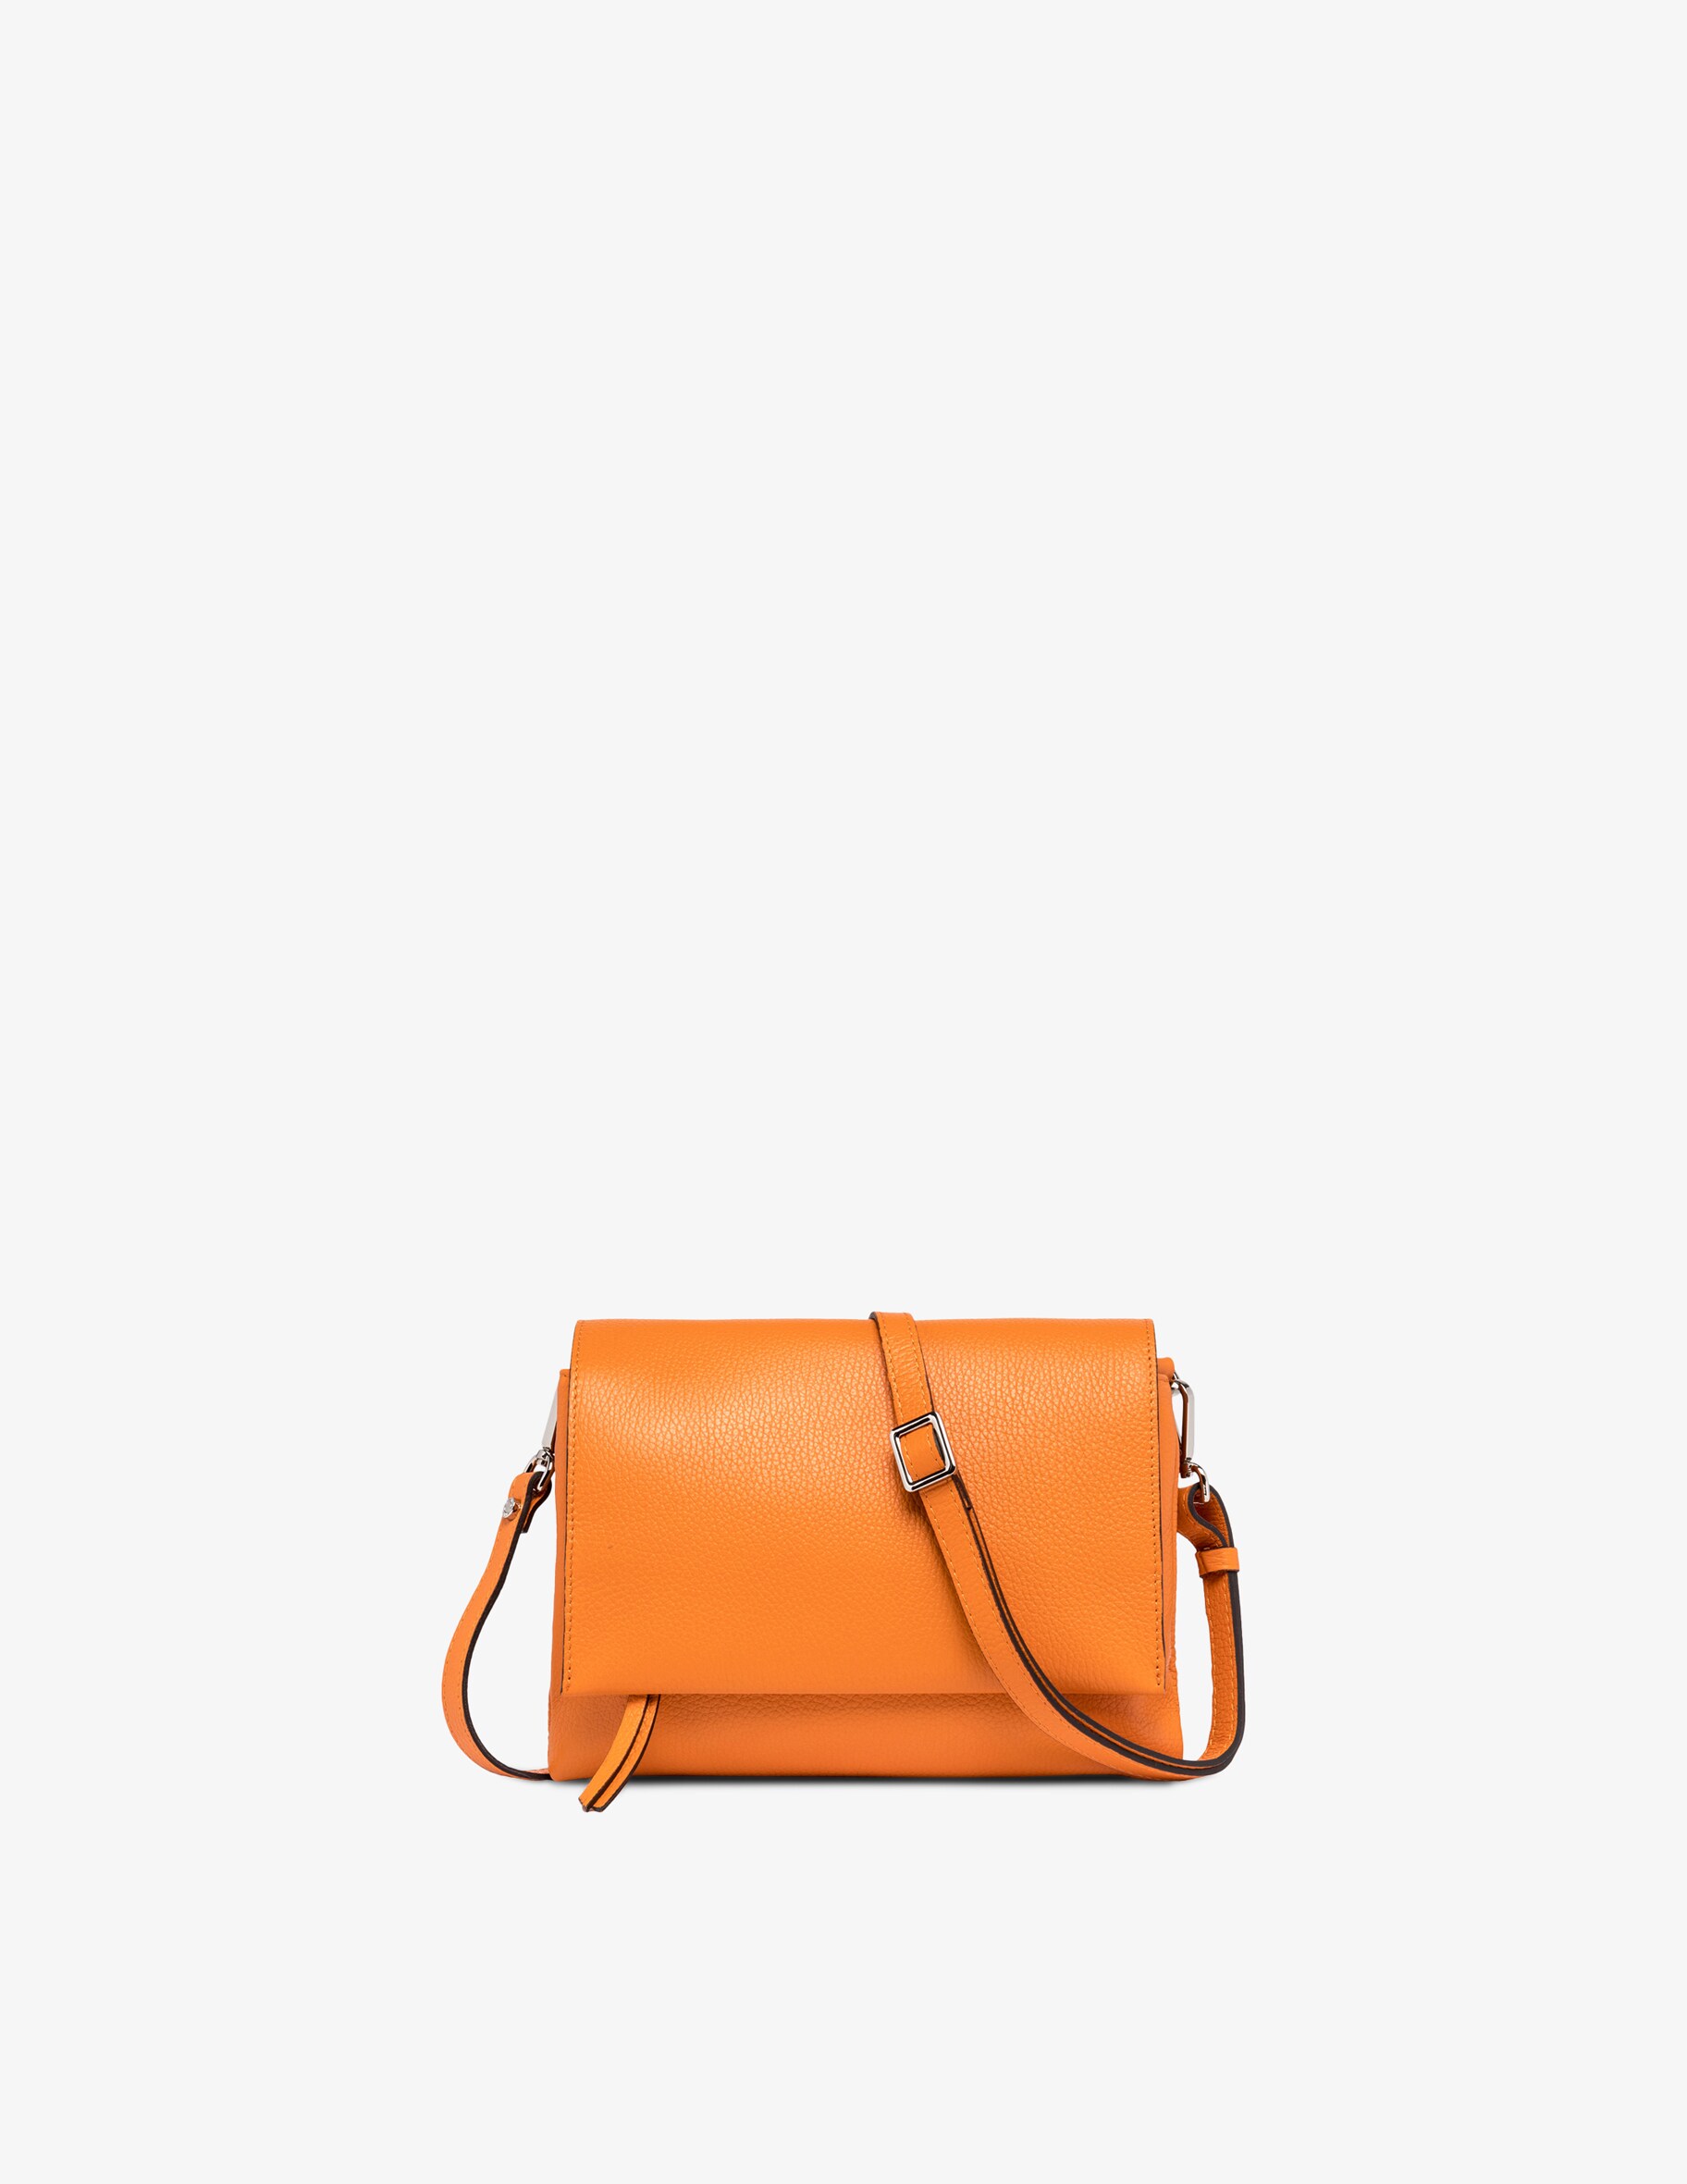 Сумка через плечо Three Gianni Chiarini Firenze, оранжевый сумка superlight gianni chiarini цвет natural